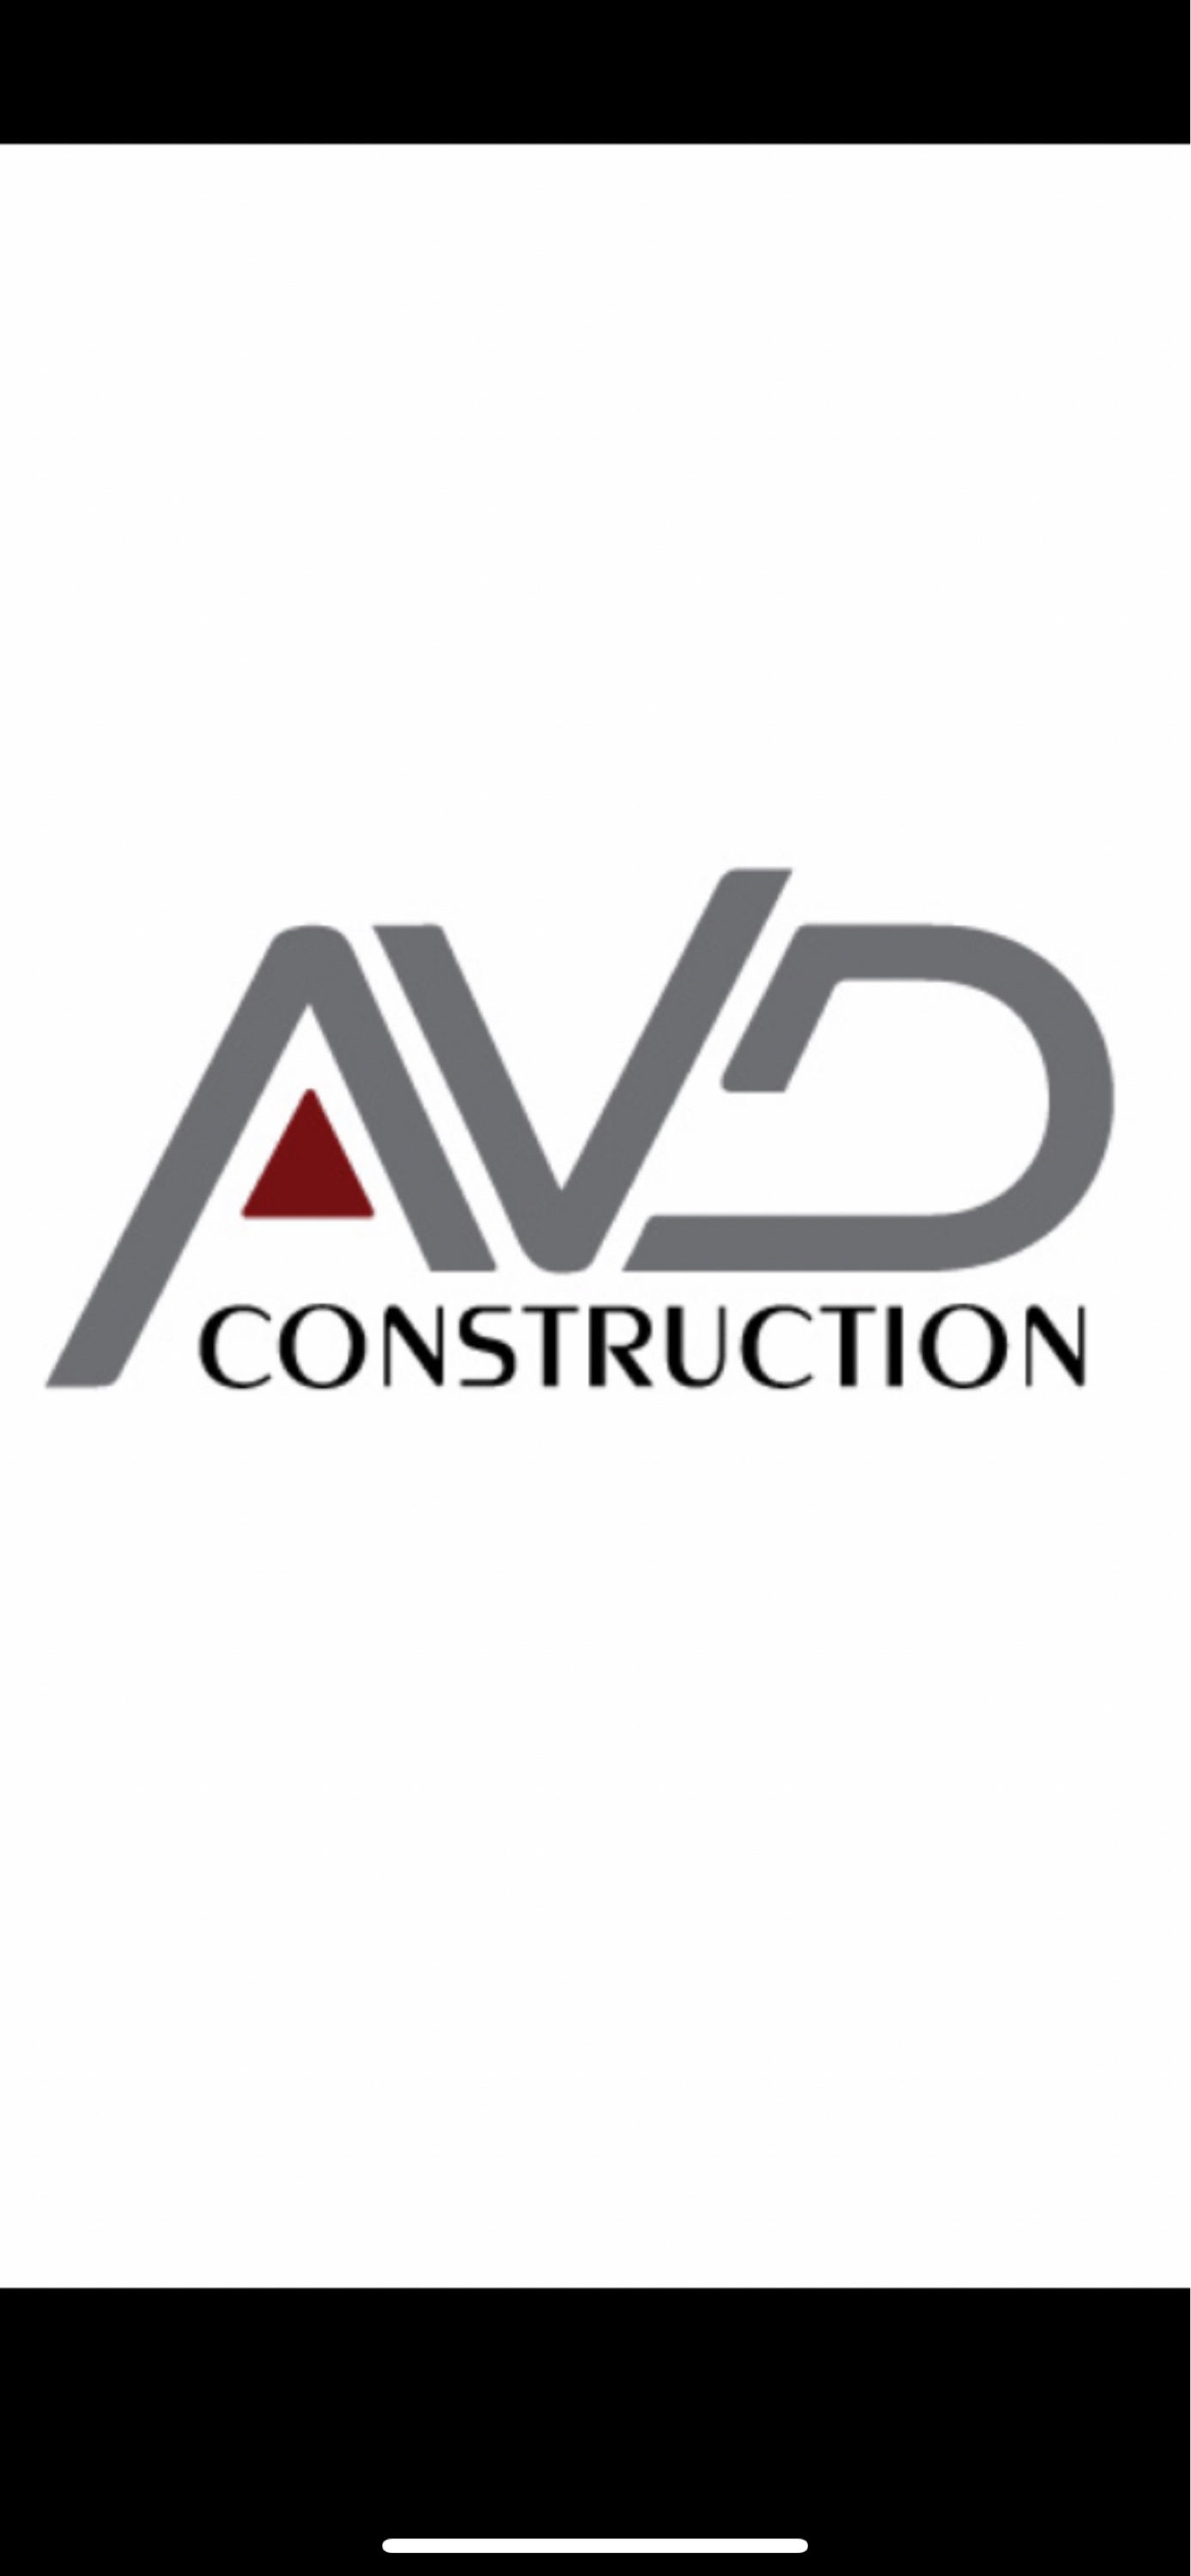 AVD Construction Logo